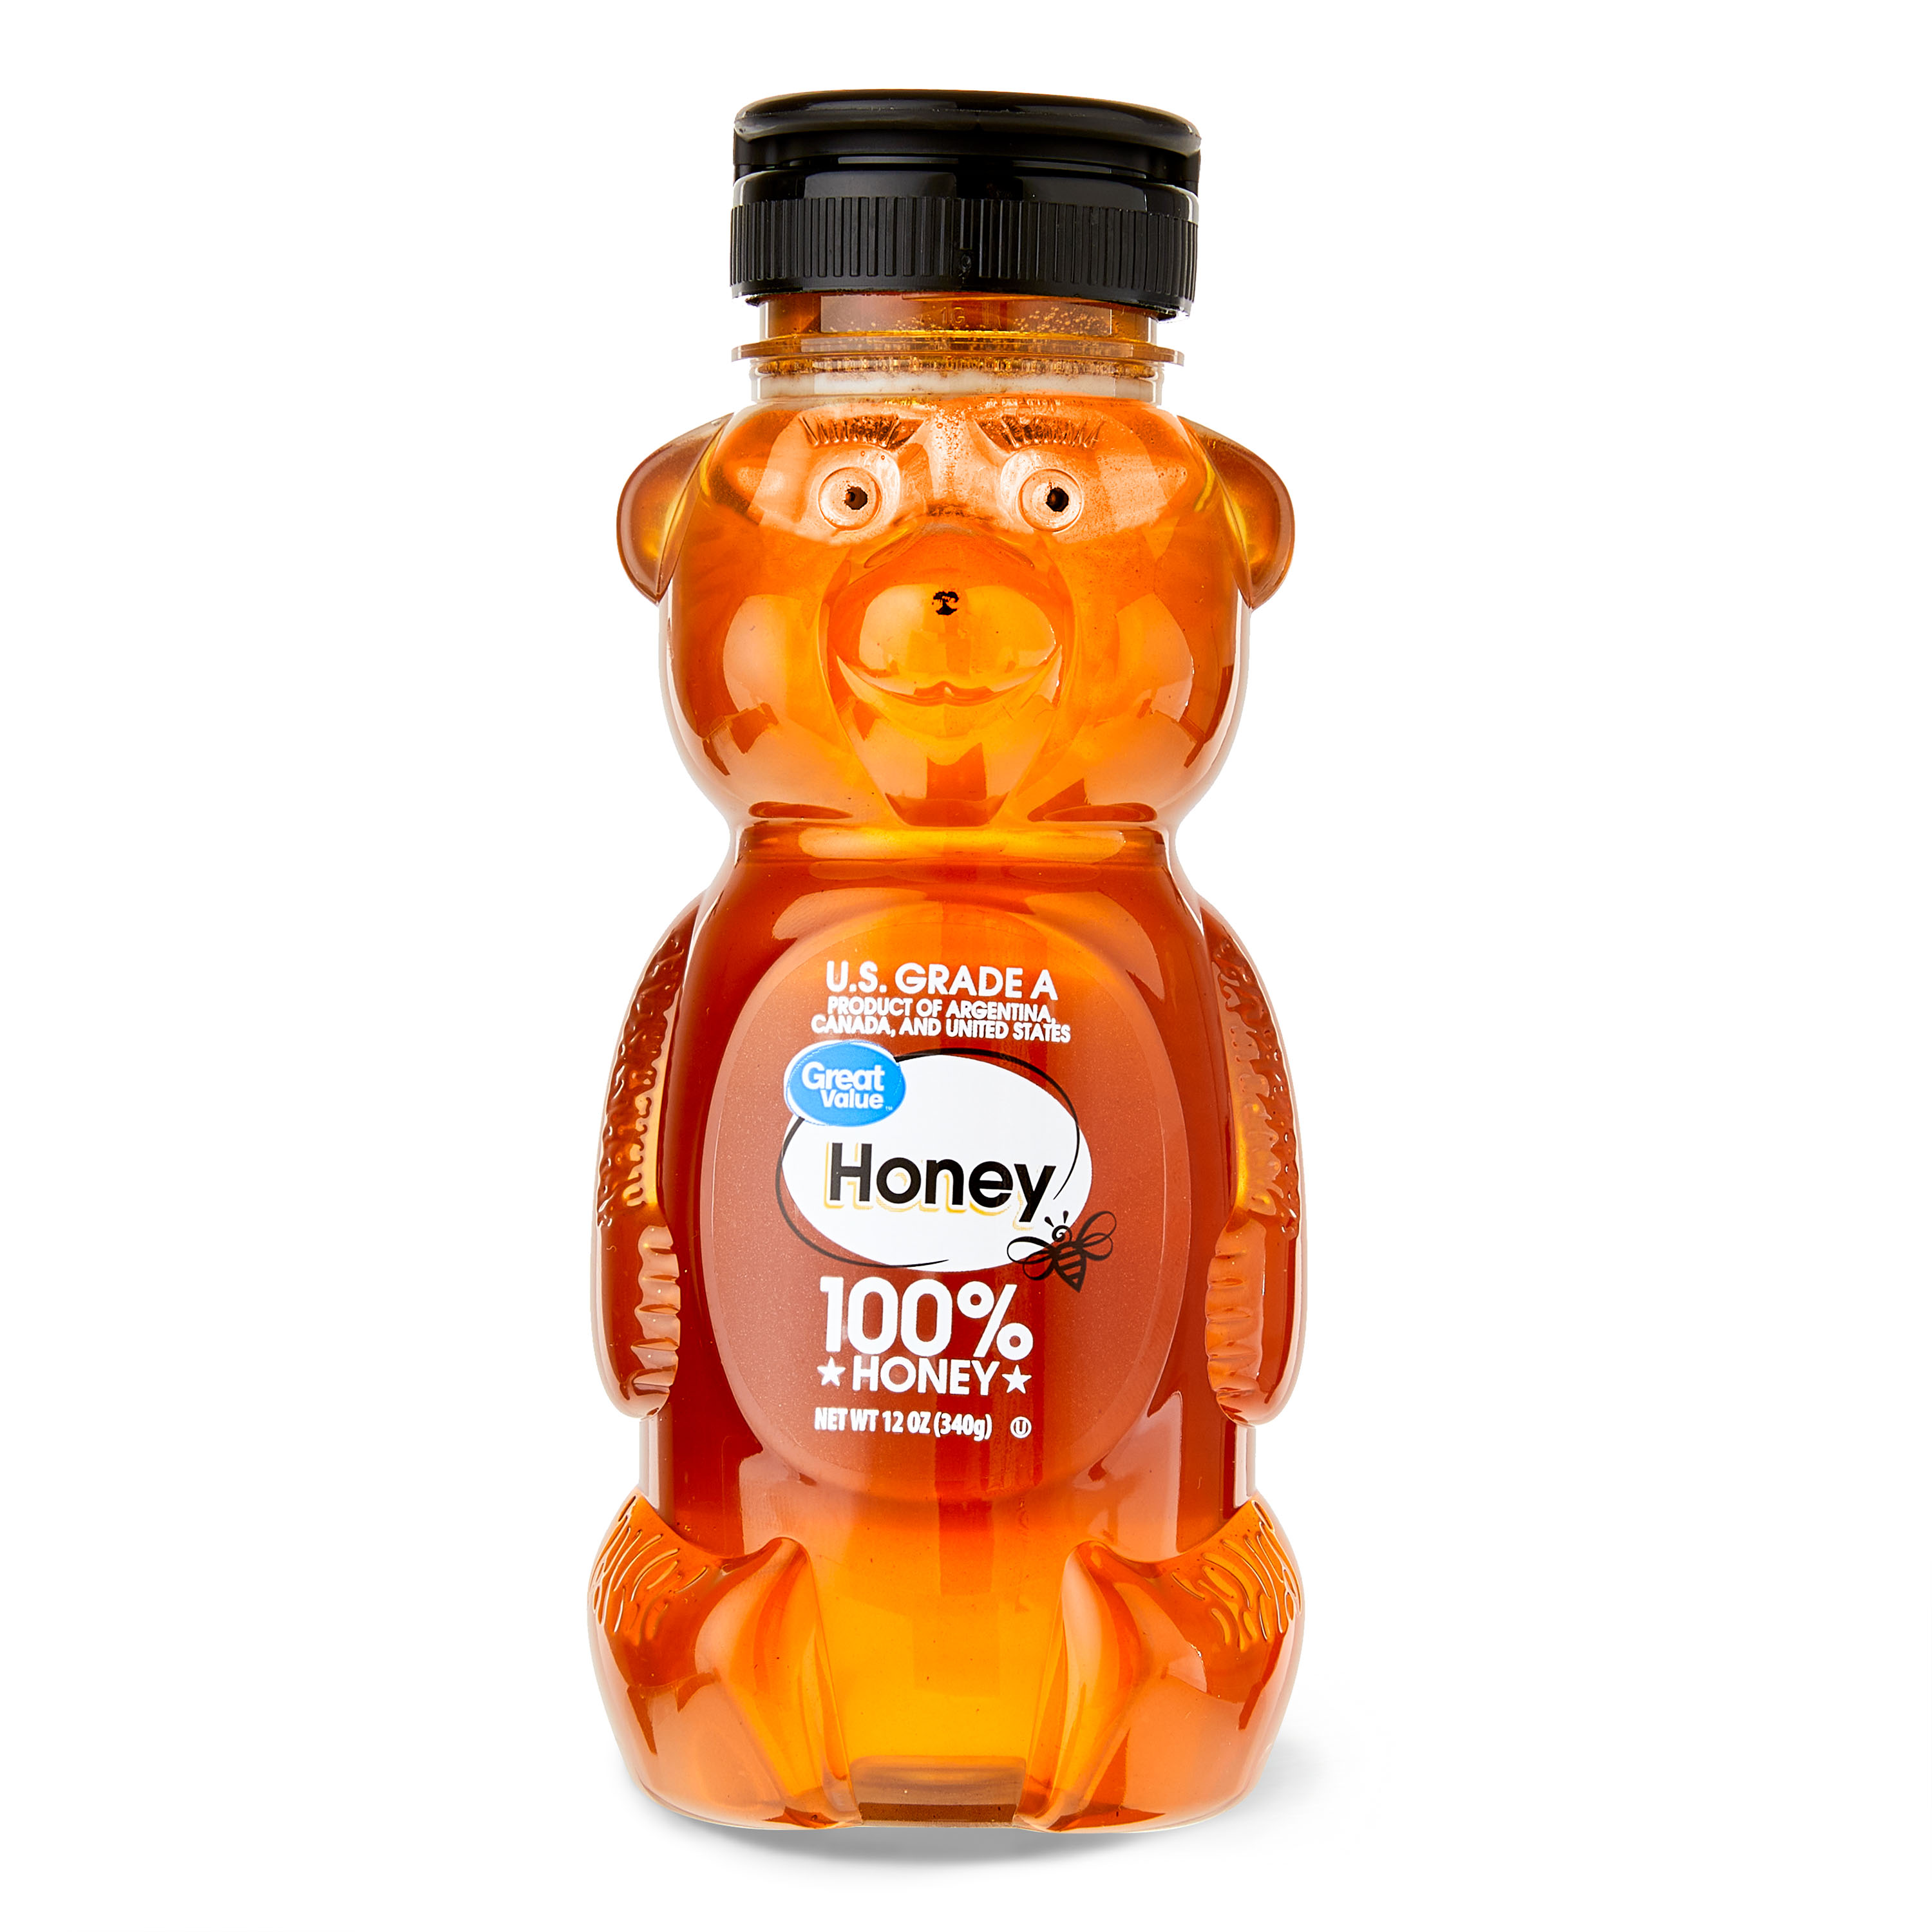 Great Value Honey, 12 oz Plastic Bear - image 1 of 5